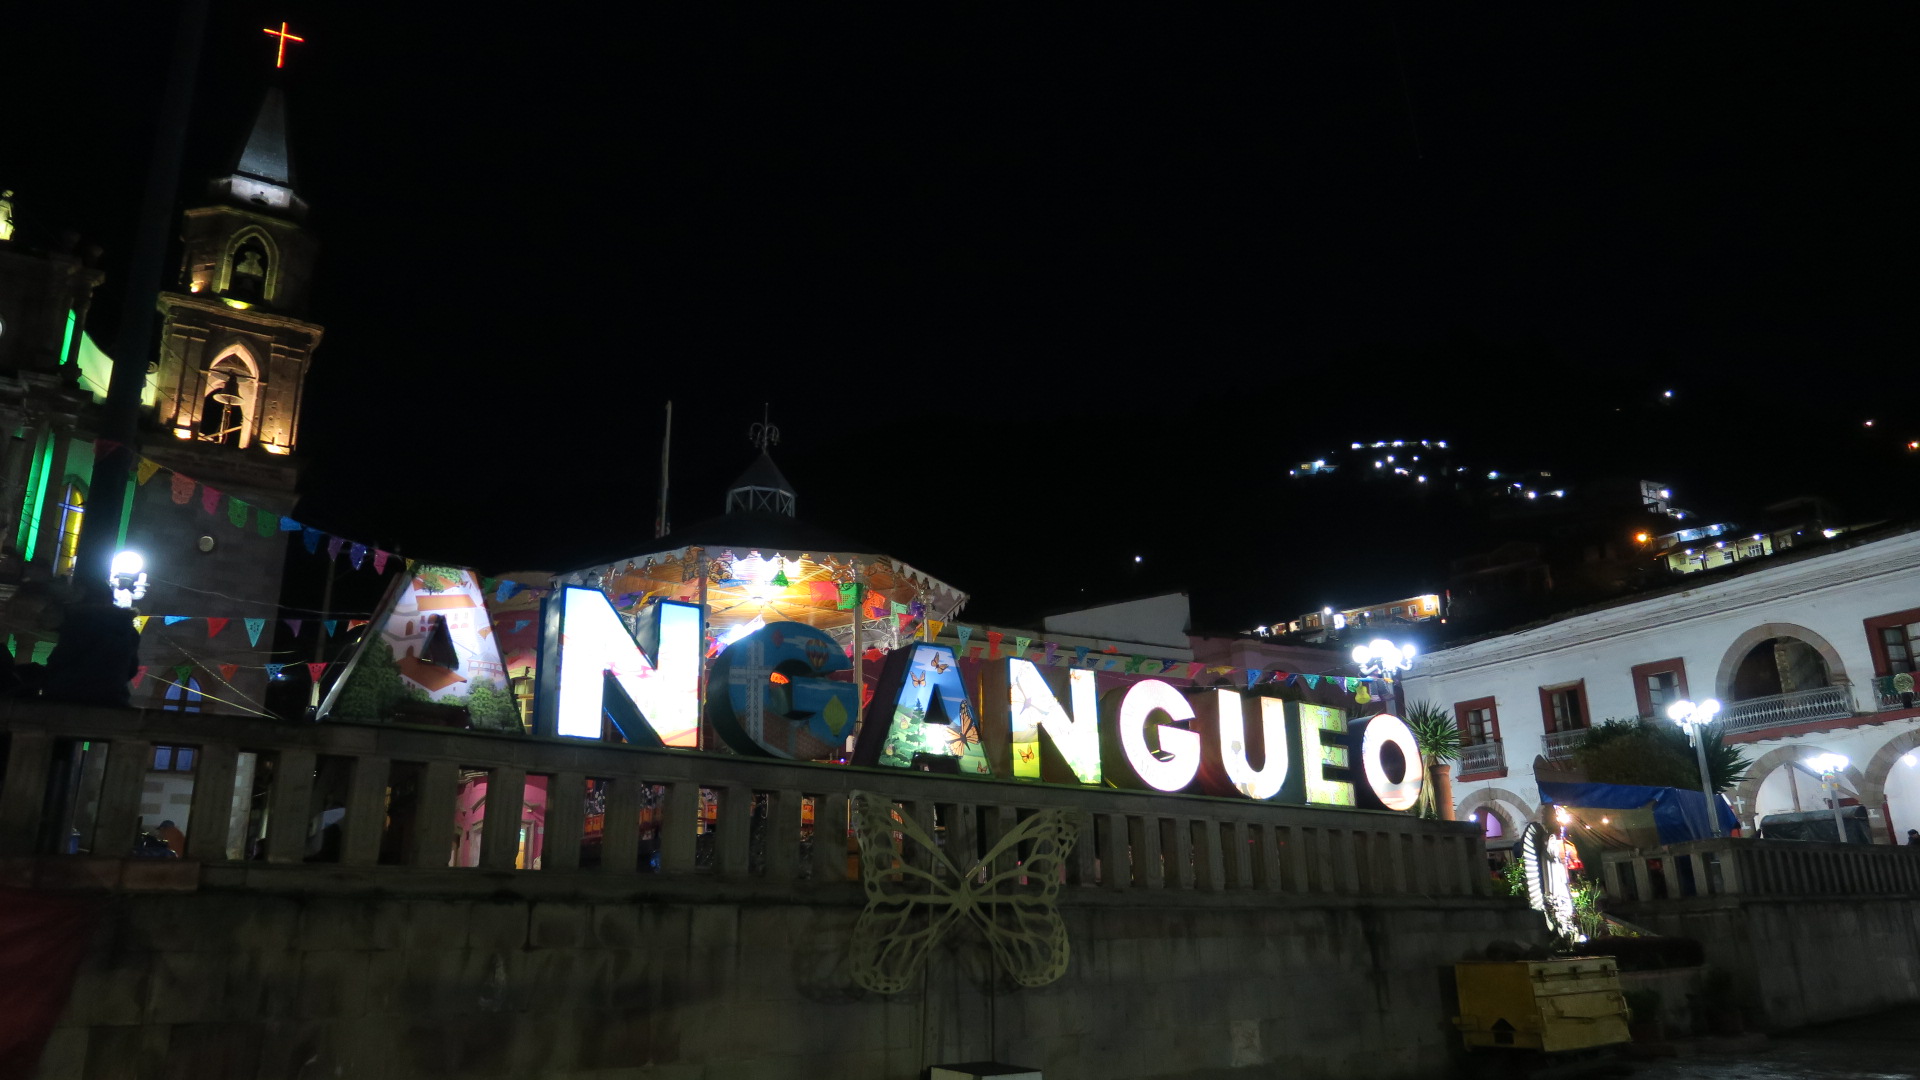 Angangueo, Michoacán, México